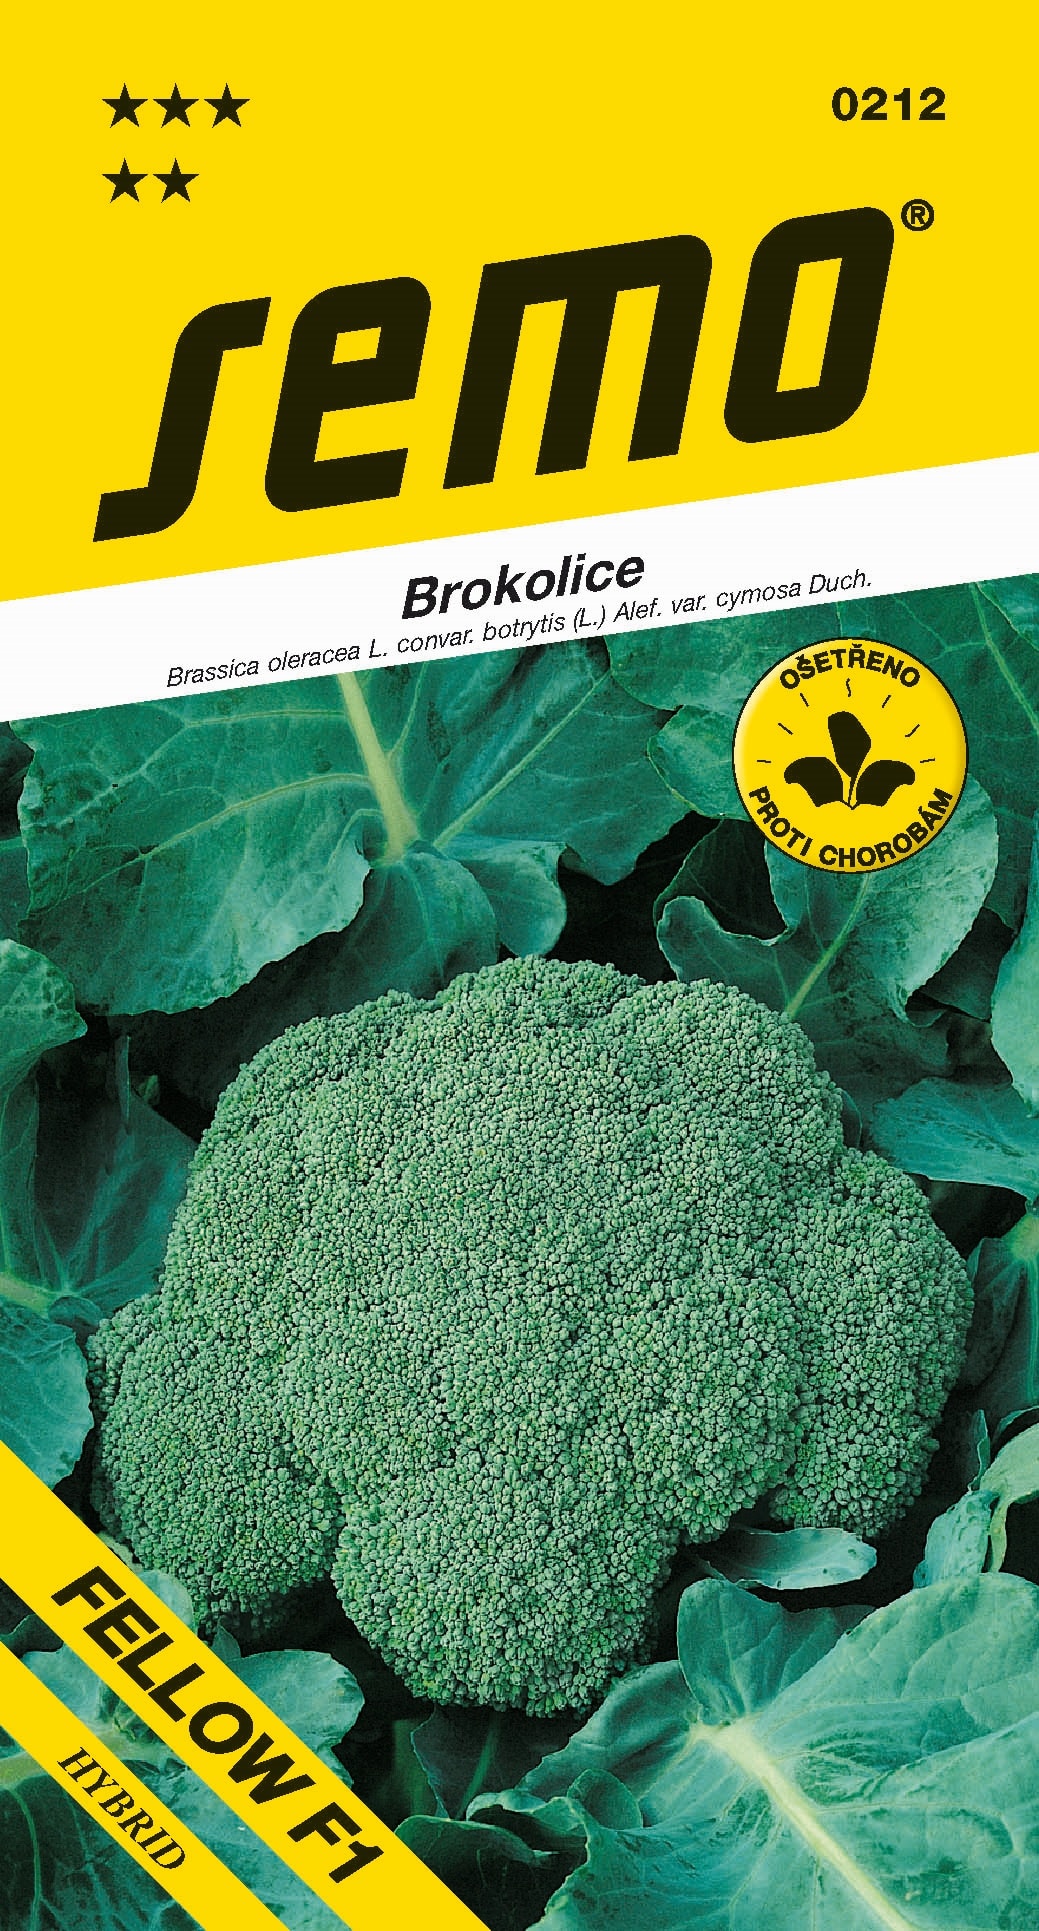 0212_brokolice-FELLOW-F1-2